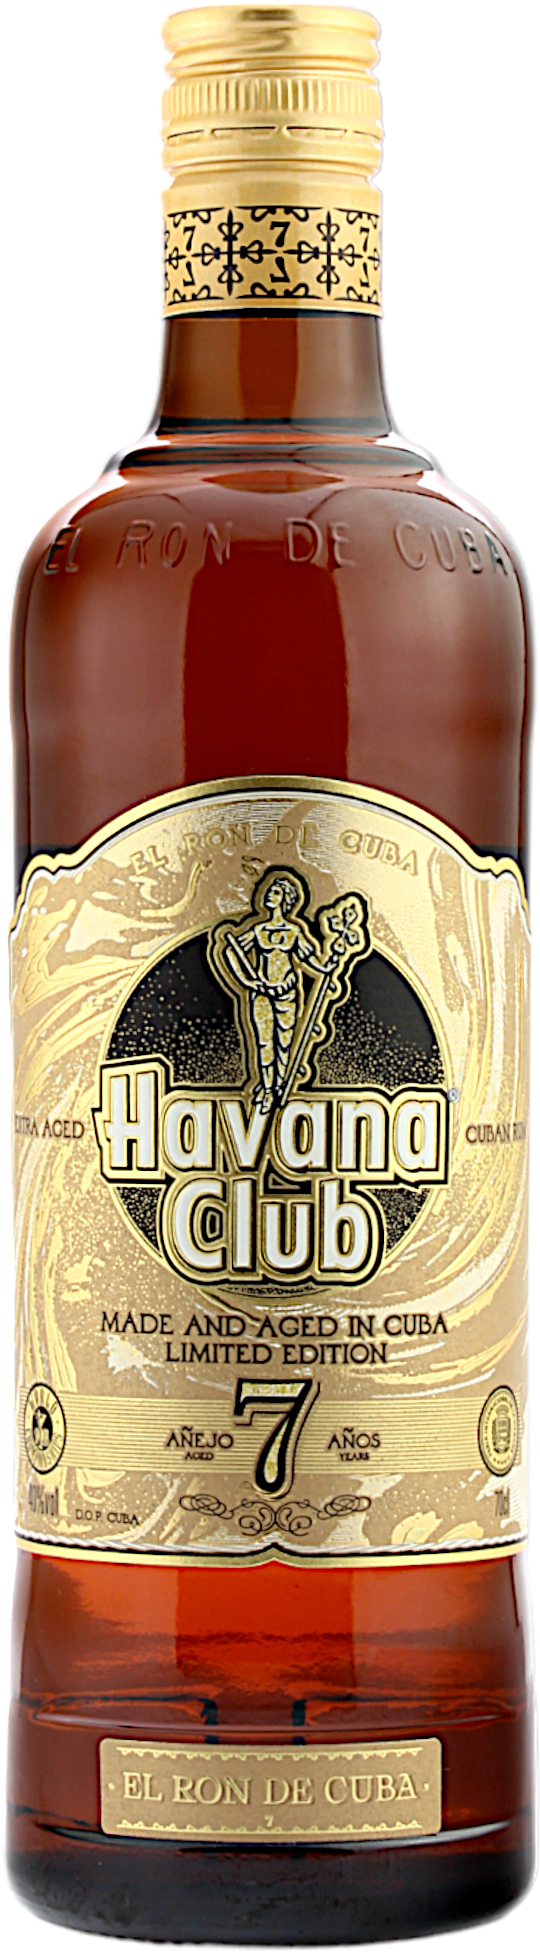 Havana Club Limited Anejo Edition Rum Jahre 7